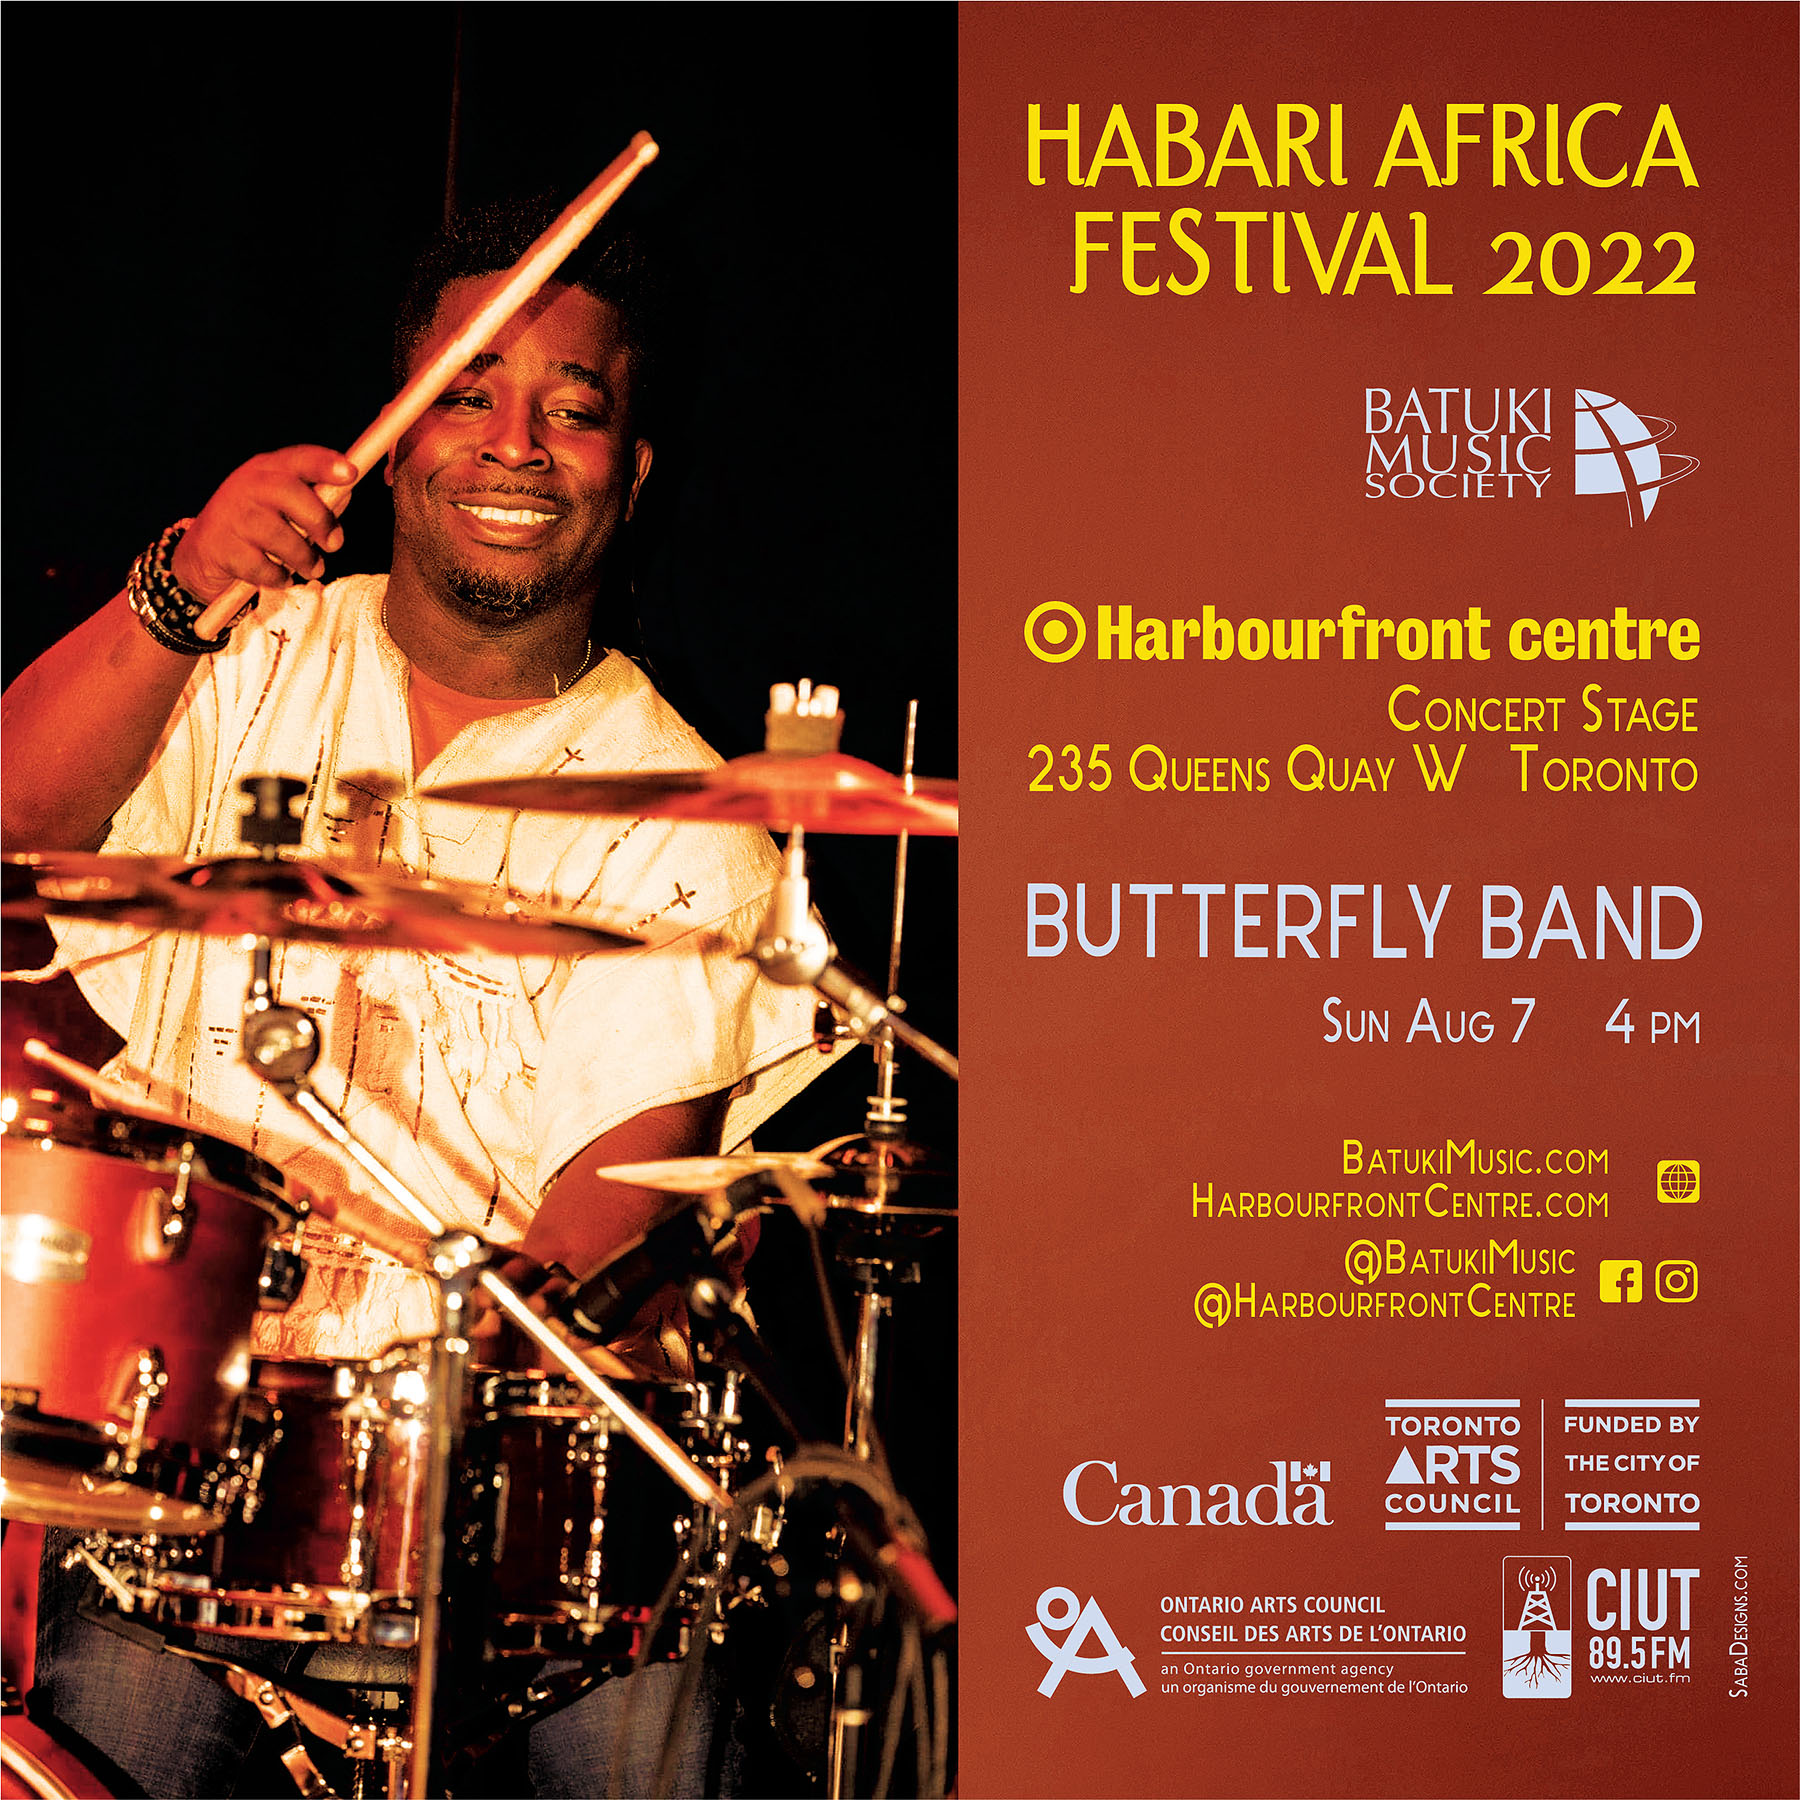 Habari Africa Live Festival 2022 by Batuki Music Society Butterfly Band